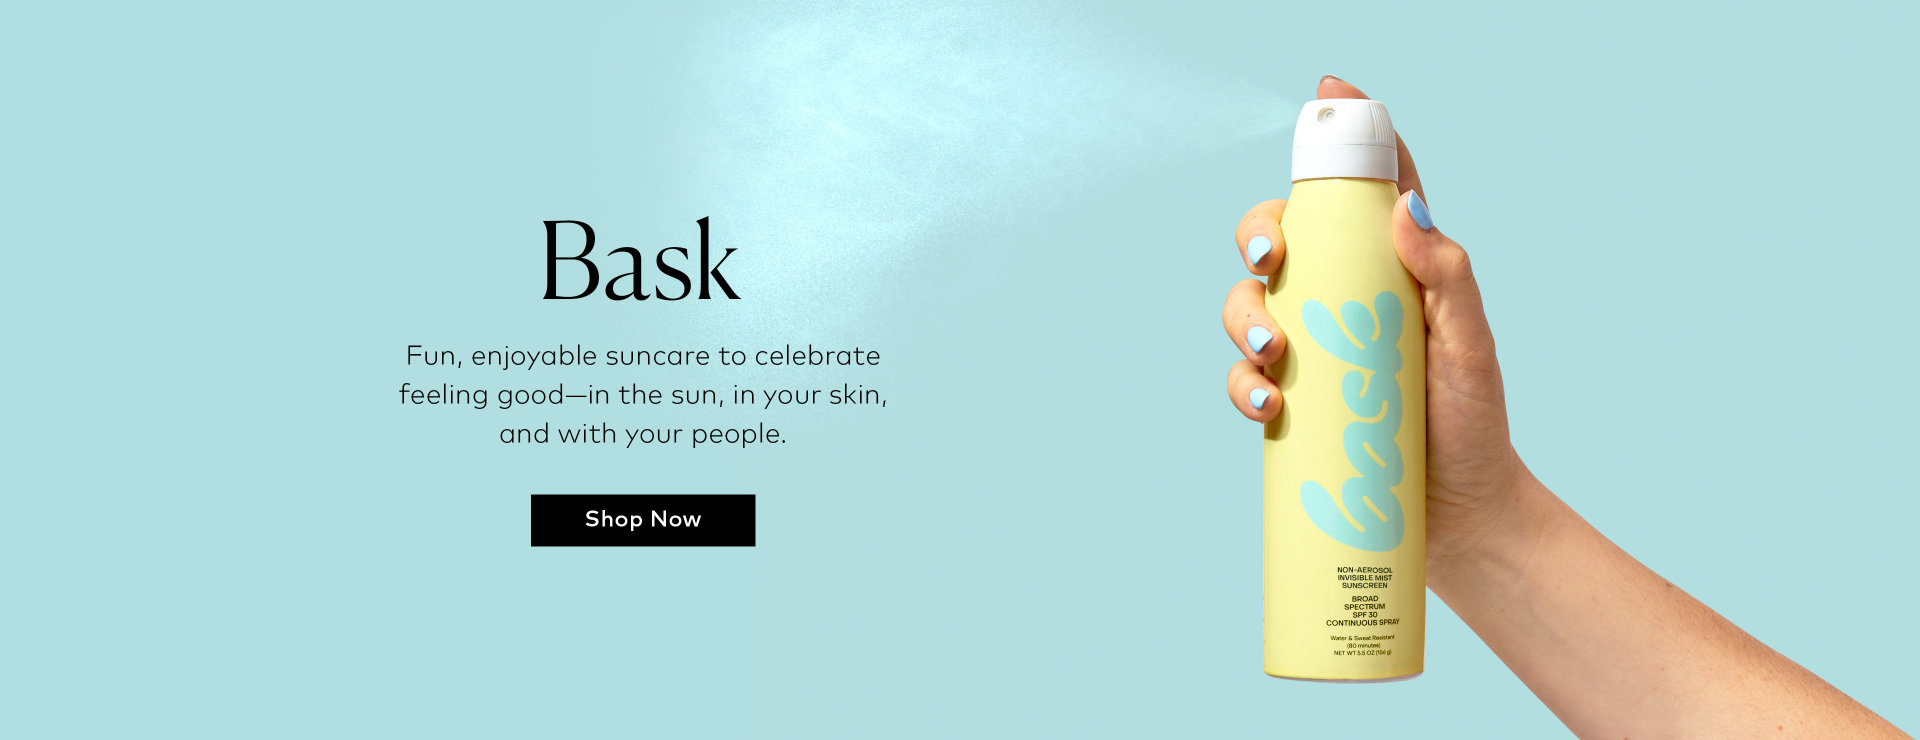 Shop Bask now on Beautylish.com! 